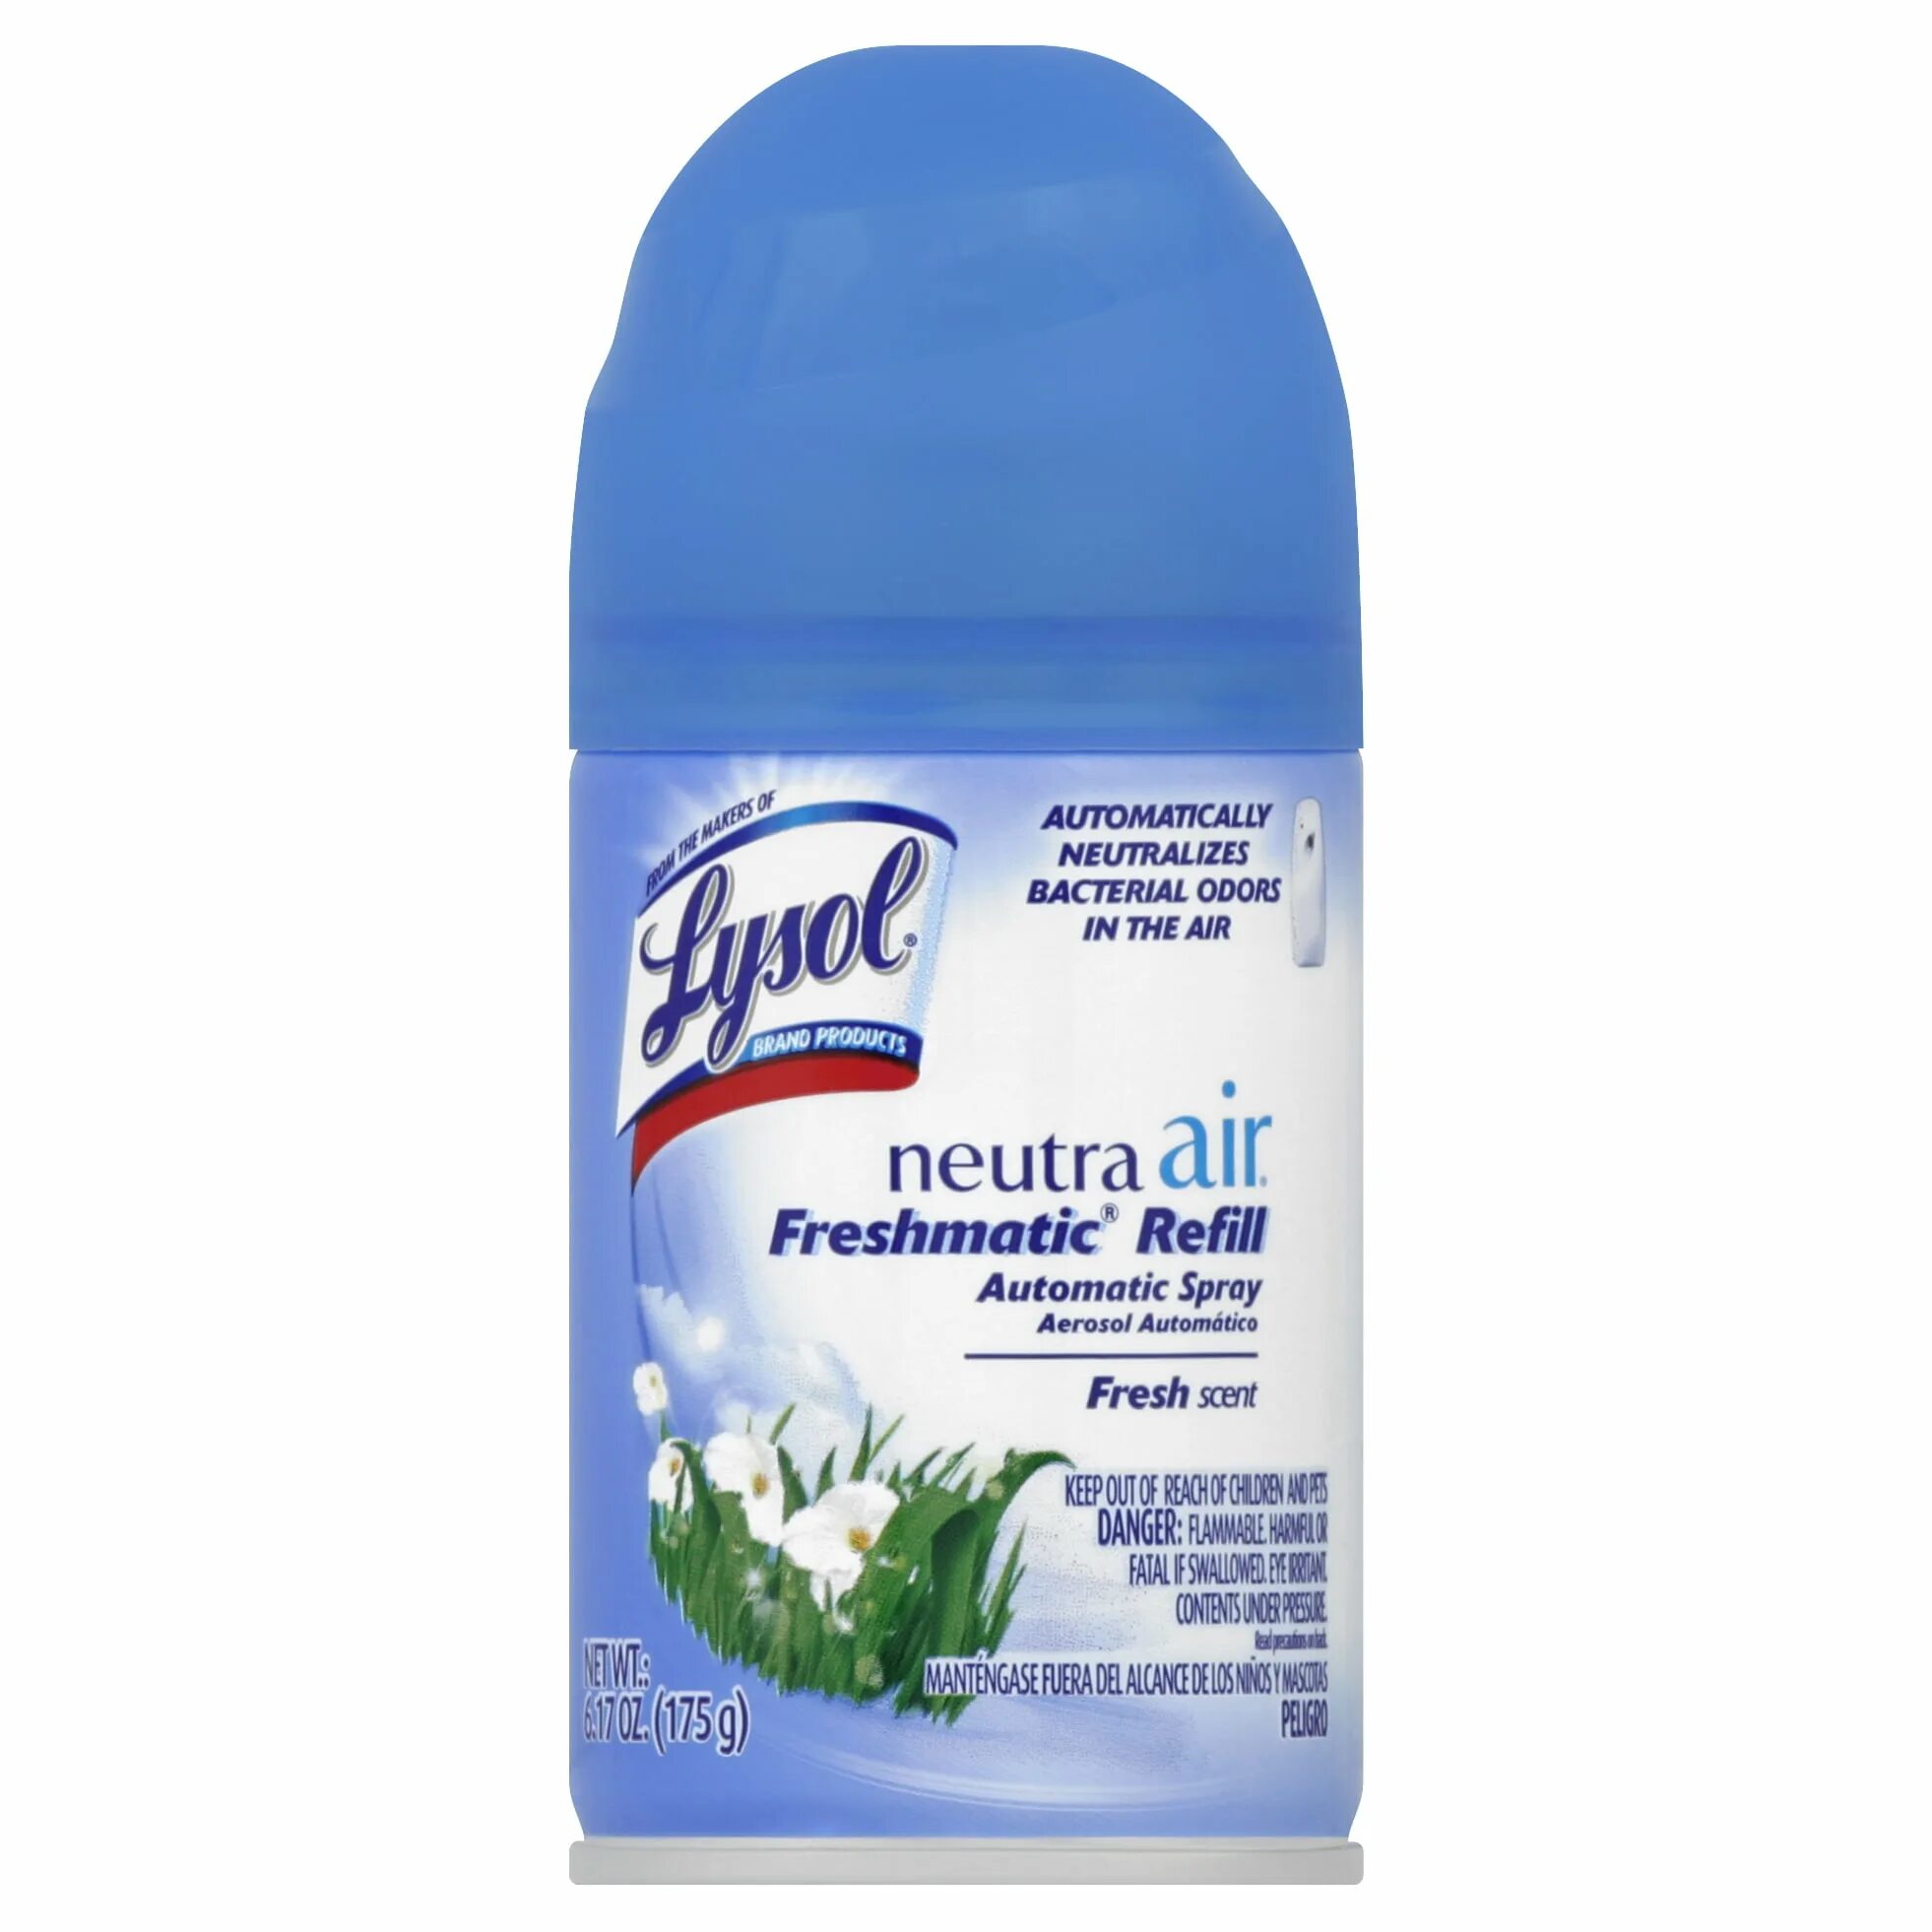 Spray Freshmatic. Neutra Air. Air Fresh Home Spray. Kunzel Air Fresh Spray.